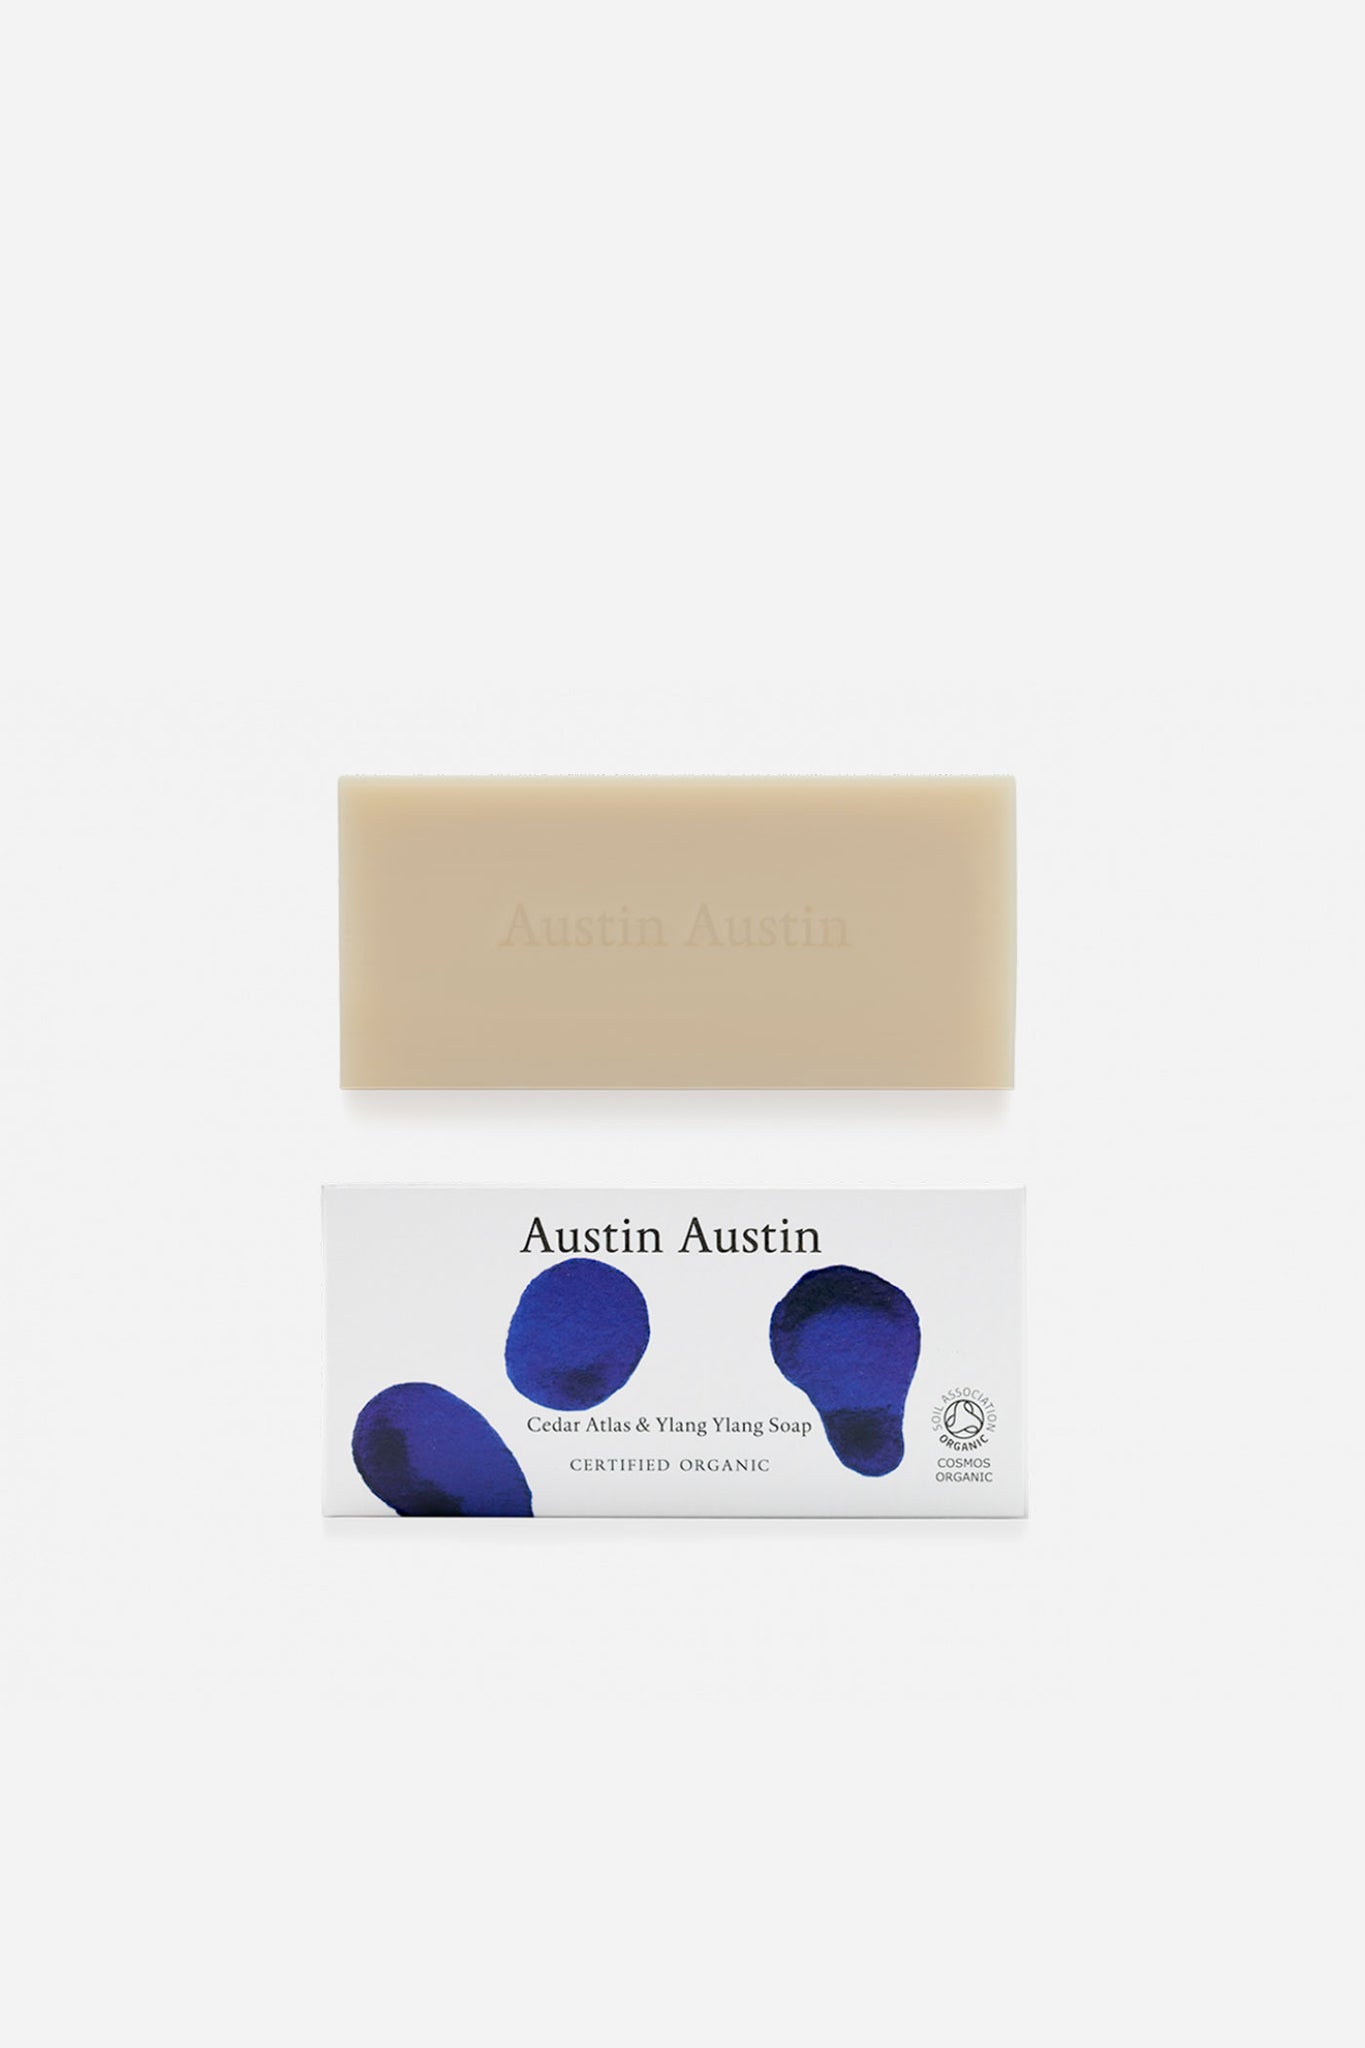 Austin Austin "Cedar Atlas & Ylang Ylang Soap Bar"